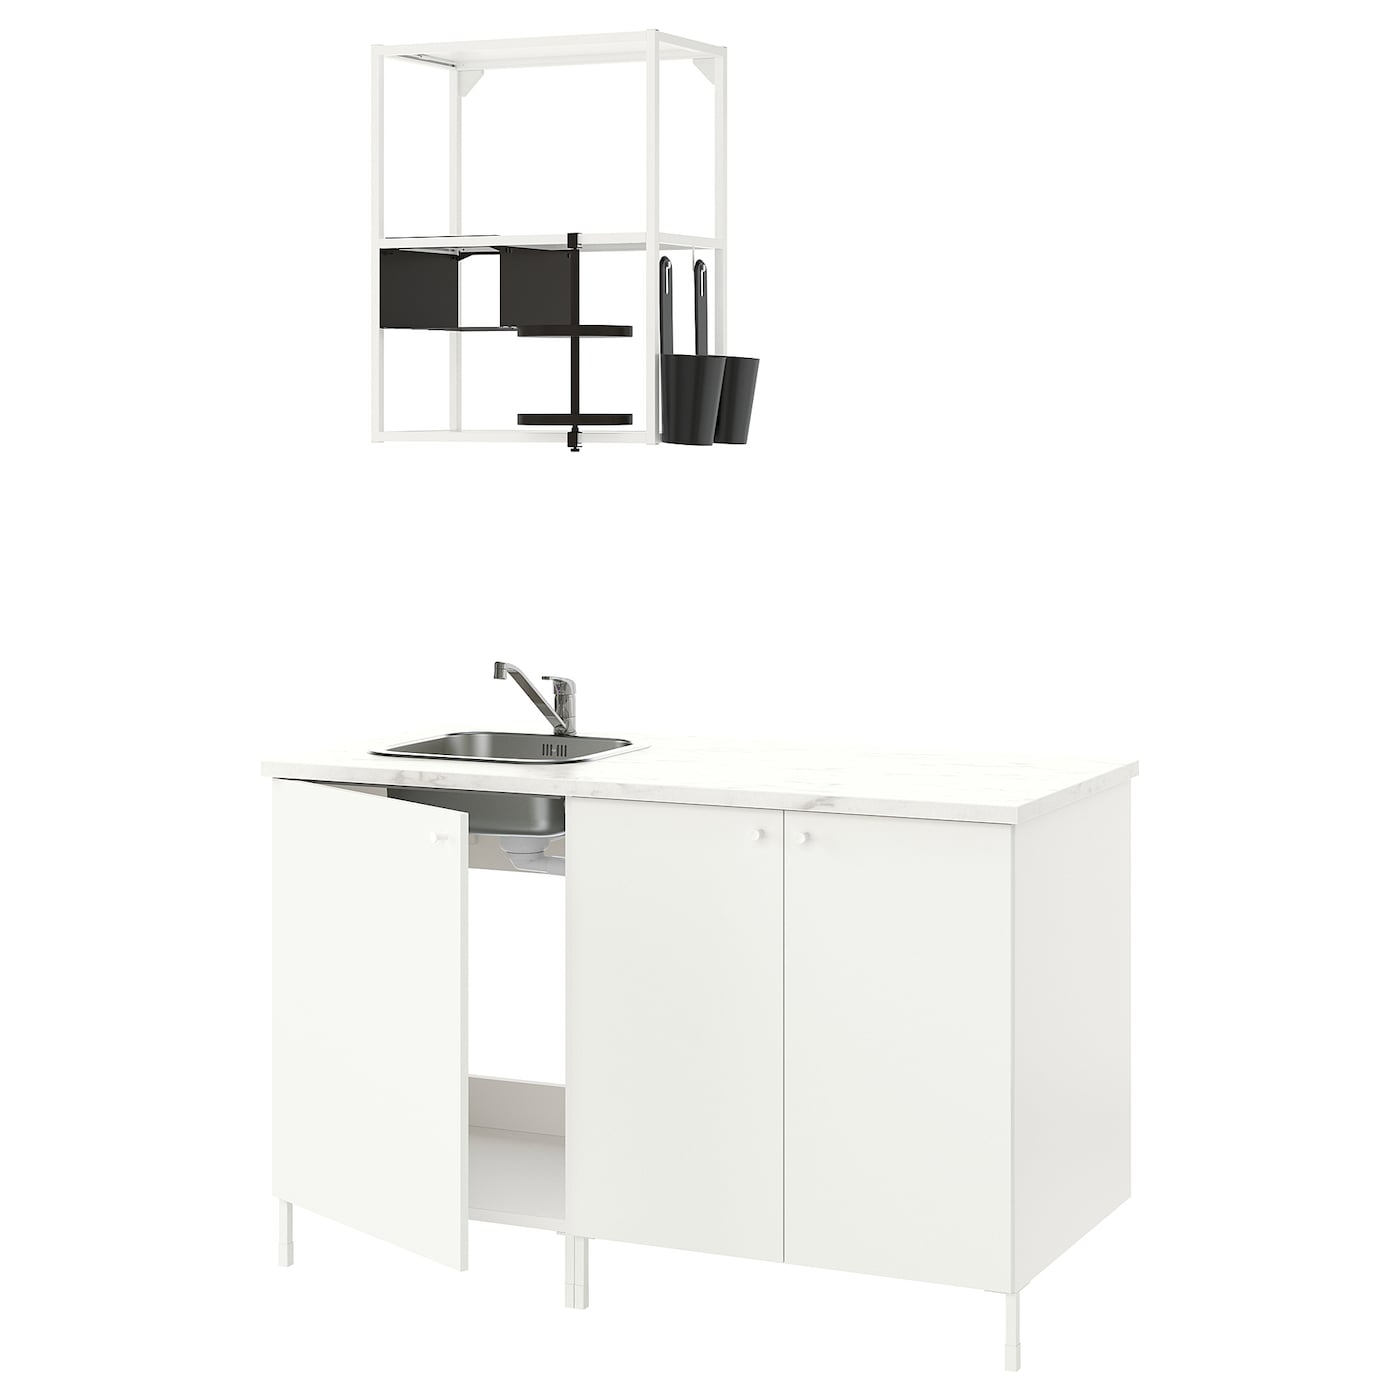 Кухонная комбинация для хранения - ENHET  IKEA/ ЭНХЕТ ИКЕА, 143х63,5х222 см, белый